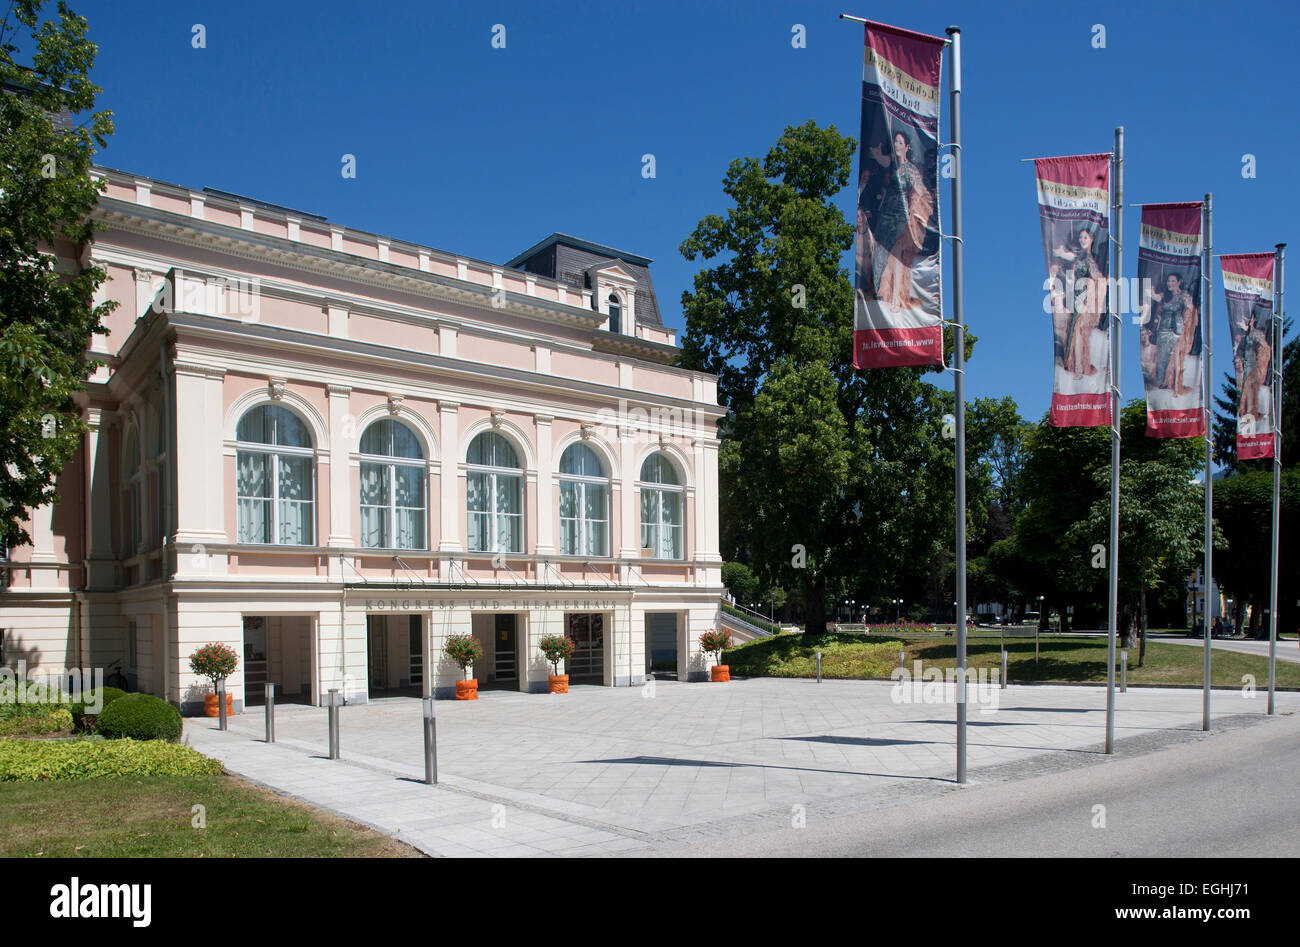 Congress venue and theatre in the spa gardens, Bad Ischl, Salzkammergut, Upper Austria, Austria Stock Photo